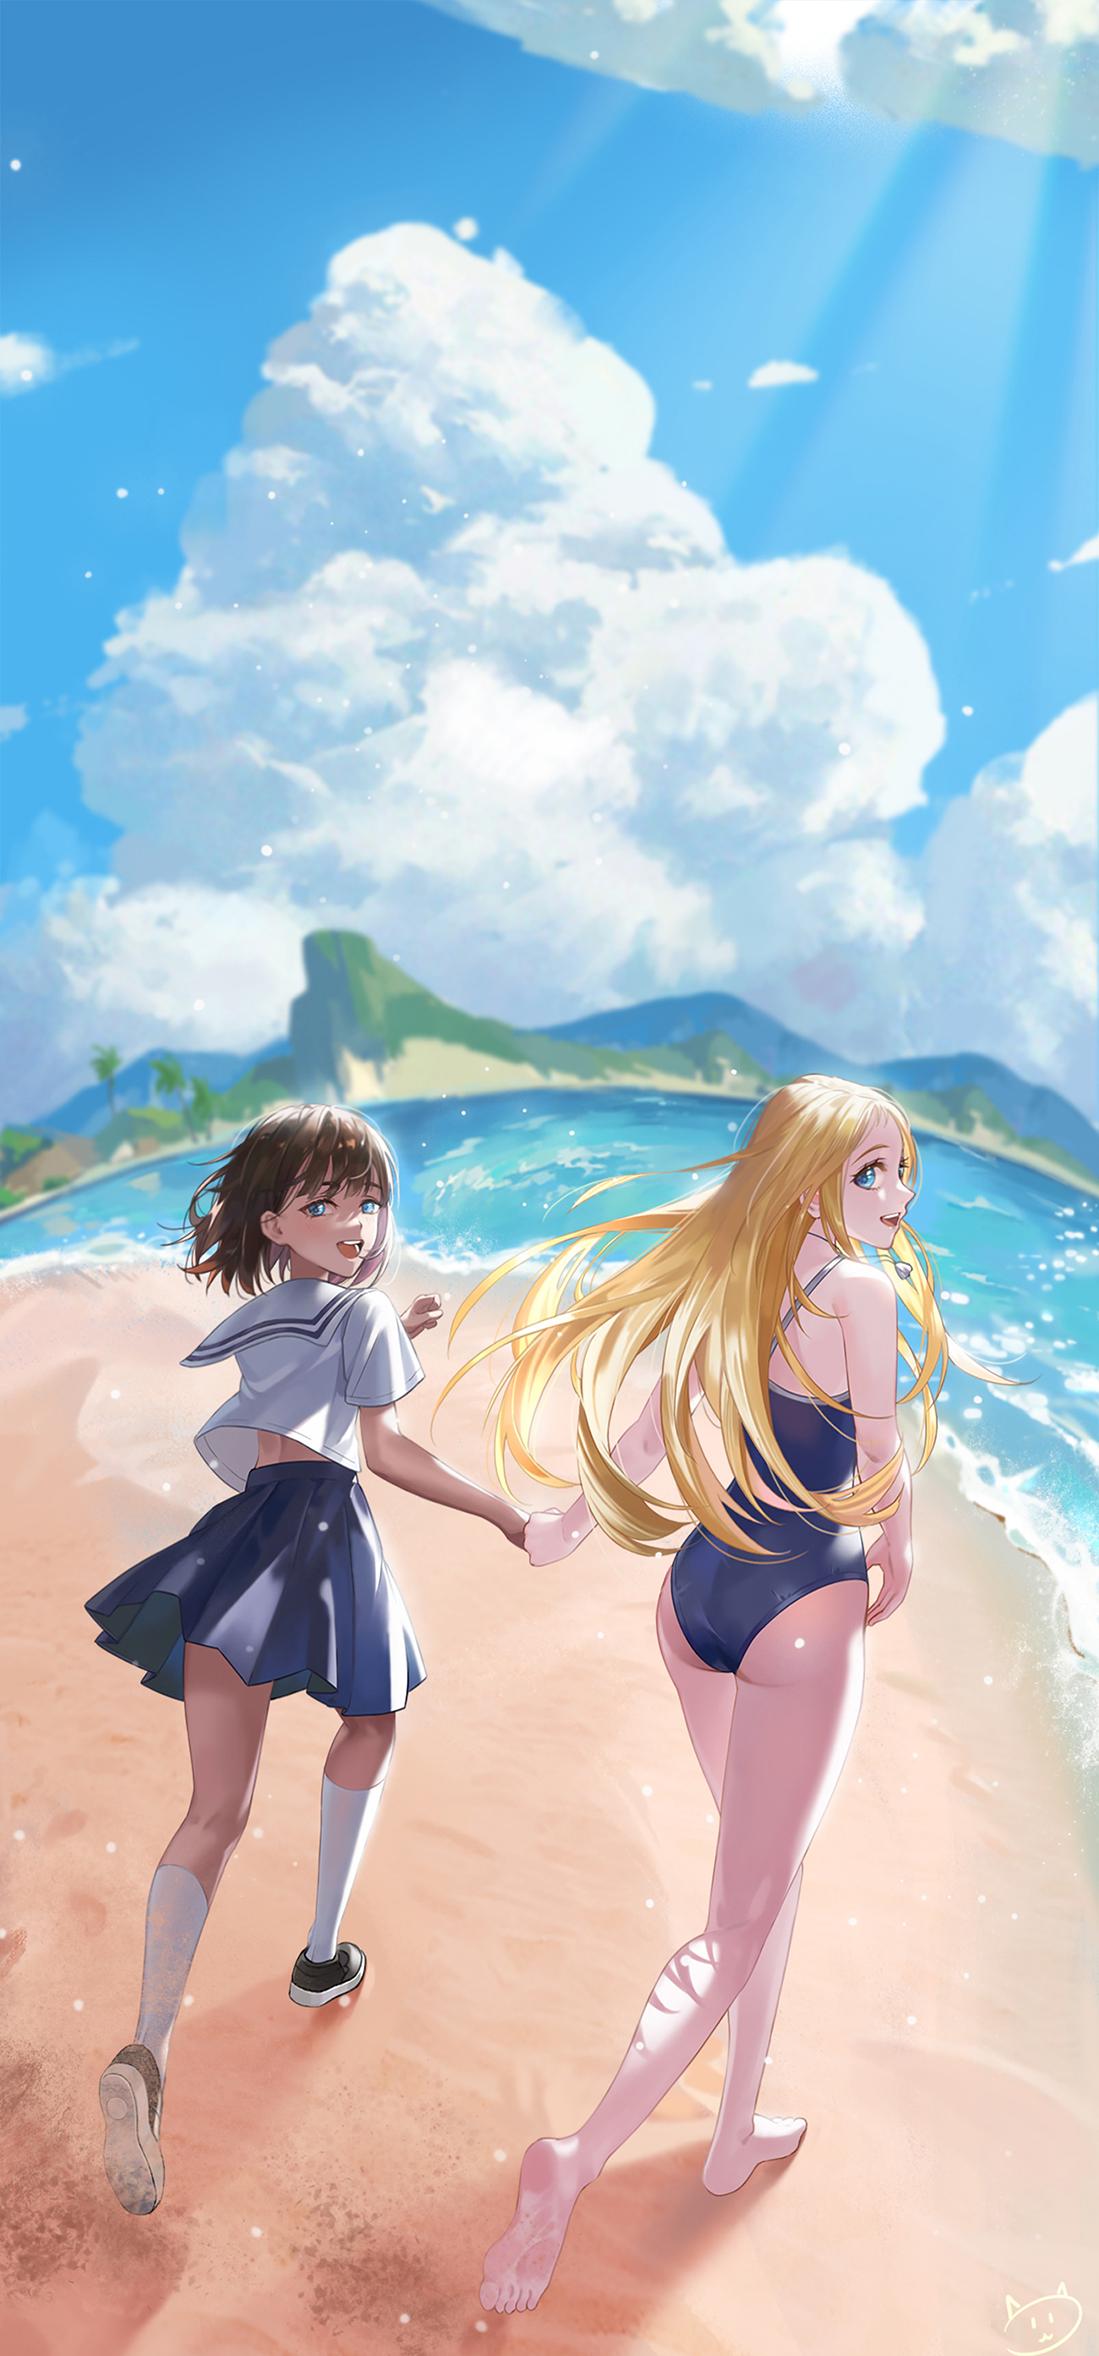 Anime Picture Summertime Render En